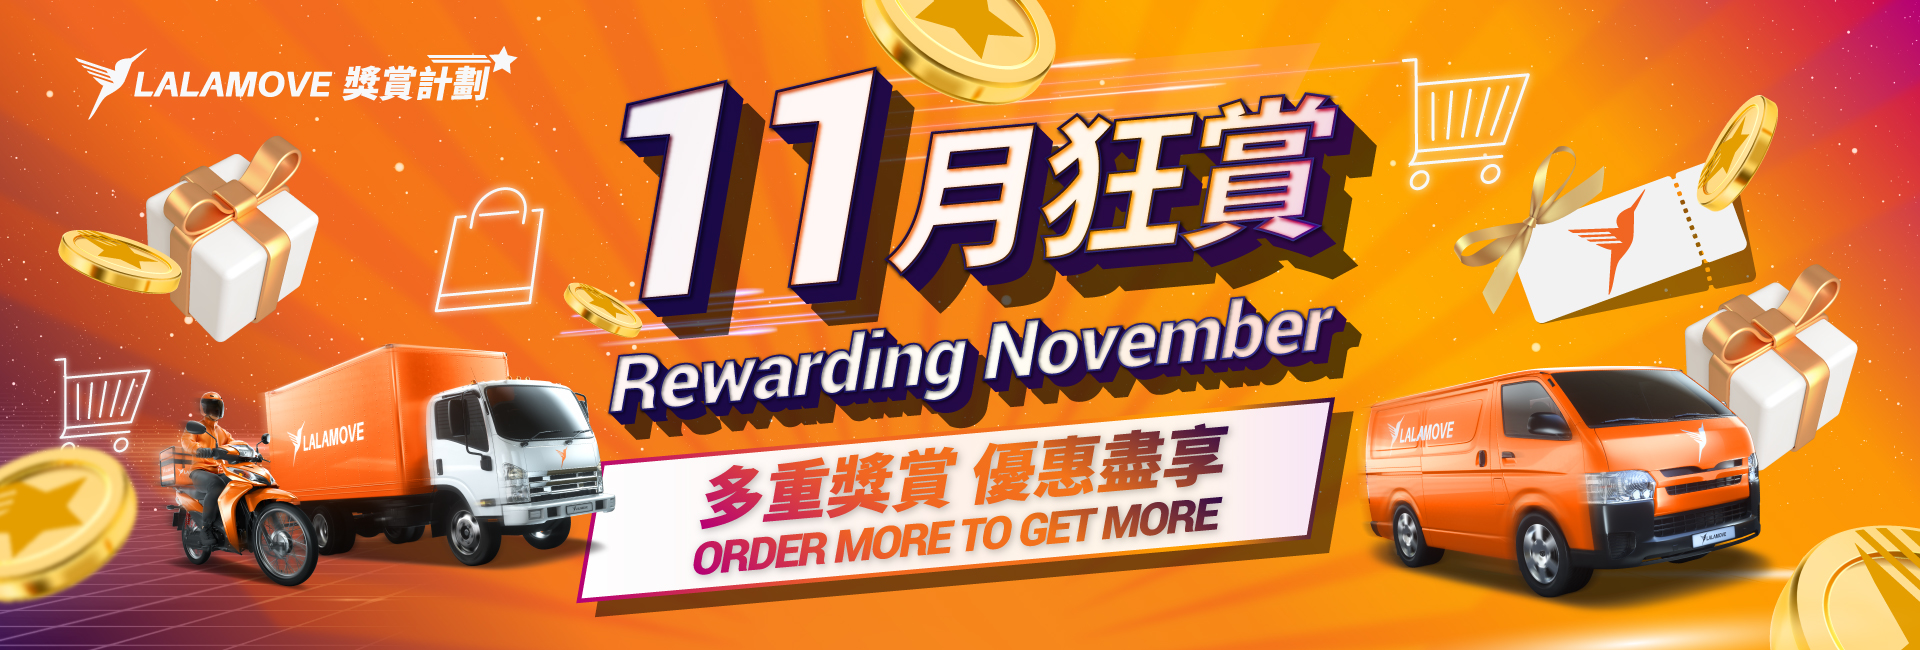 HK_fb_Ad_Rewards_NOV_20221031_1920x650